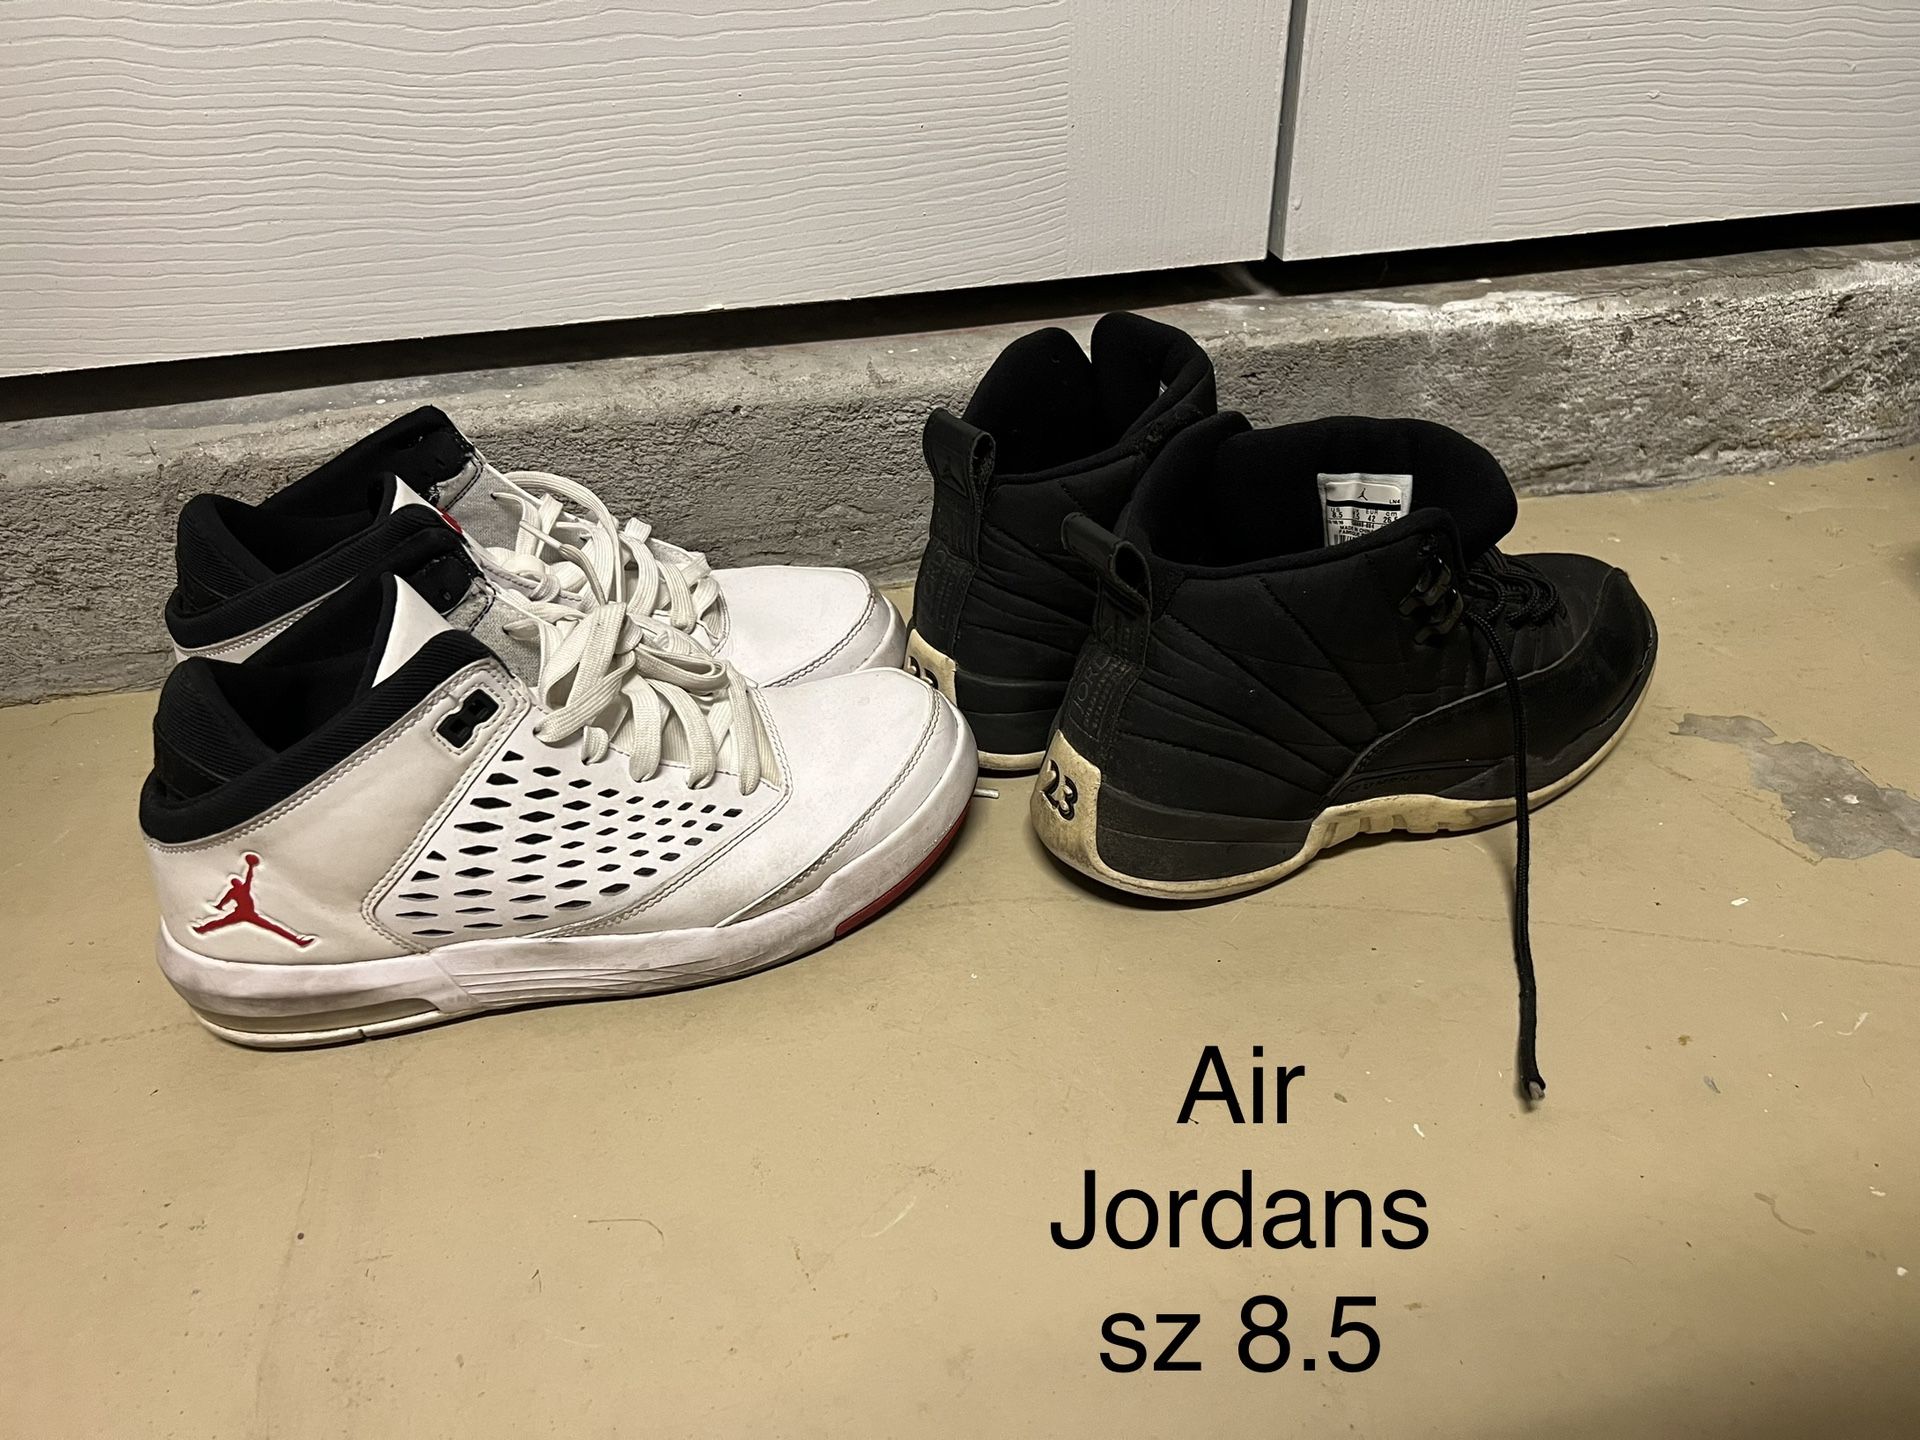 Air Jordan’s Size 8.5 